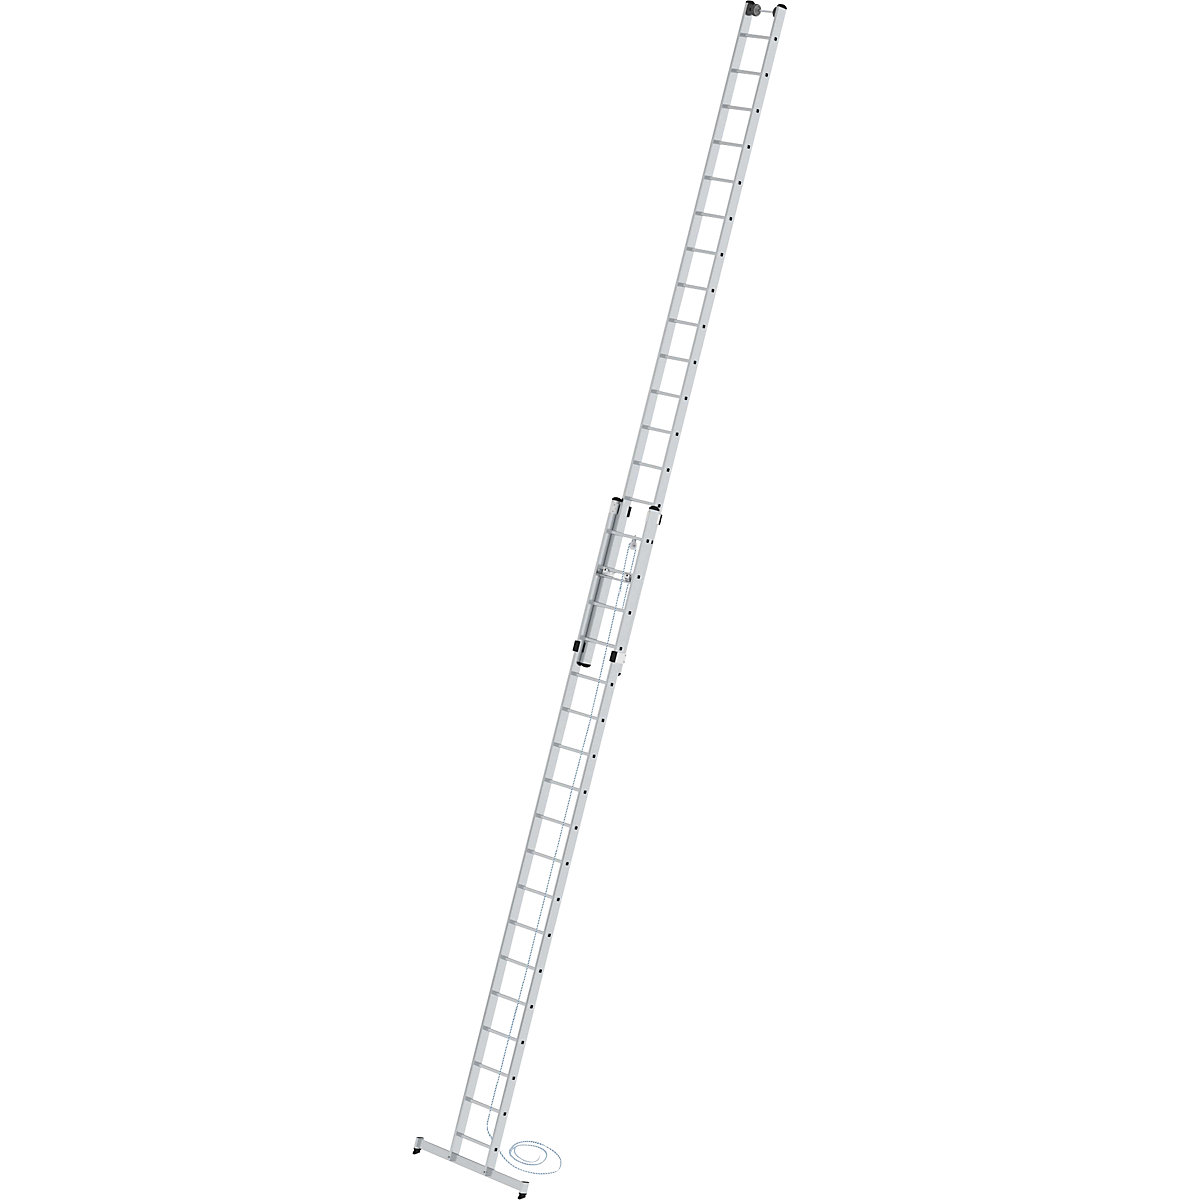 Aanlegladder, in hoogte verstelbaar – MUNK, optrekladder, 2-delig met nivello®-stabiliteitsbalk, 2 x 18 sporten-5